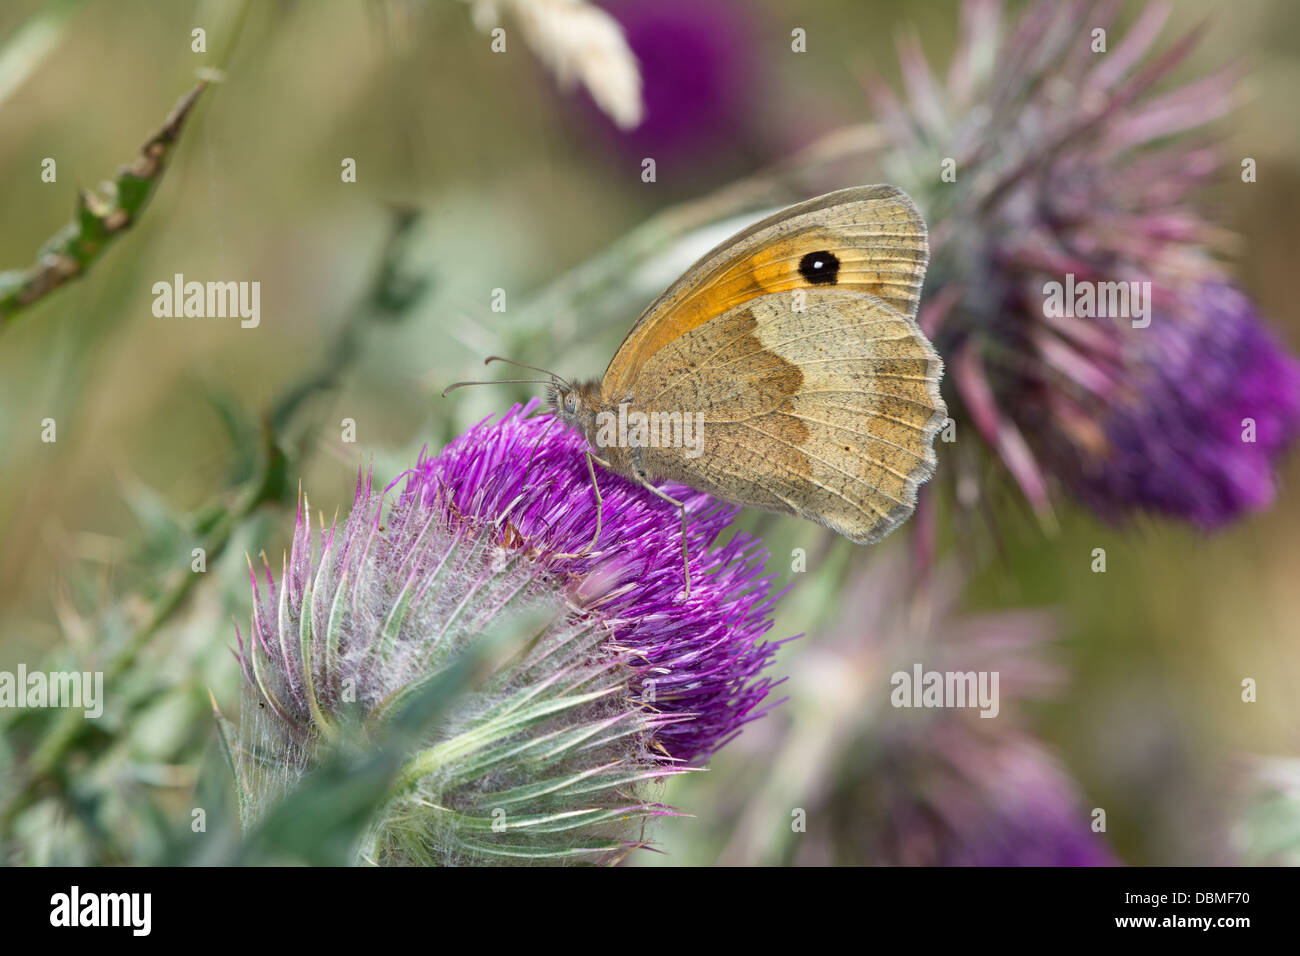 UK Butterfly, Meadow Brown, Maniola jurtina feeding on globe thistle, Carduus nutans Stock Photo